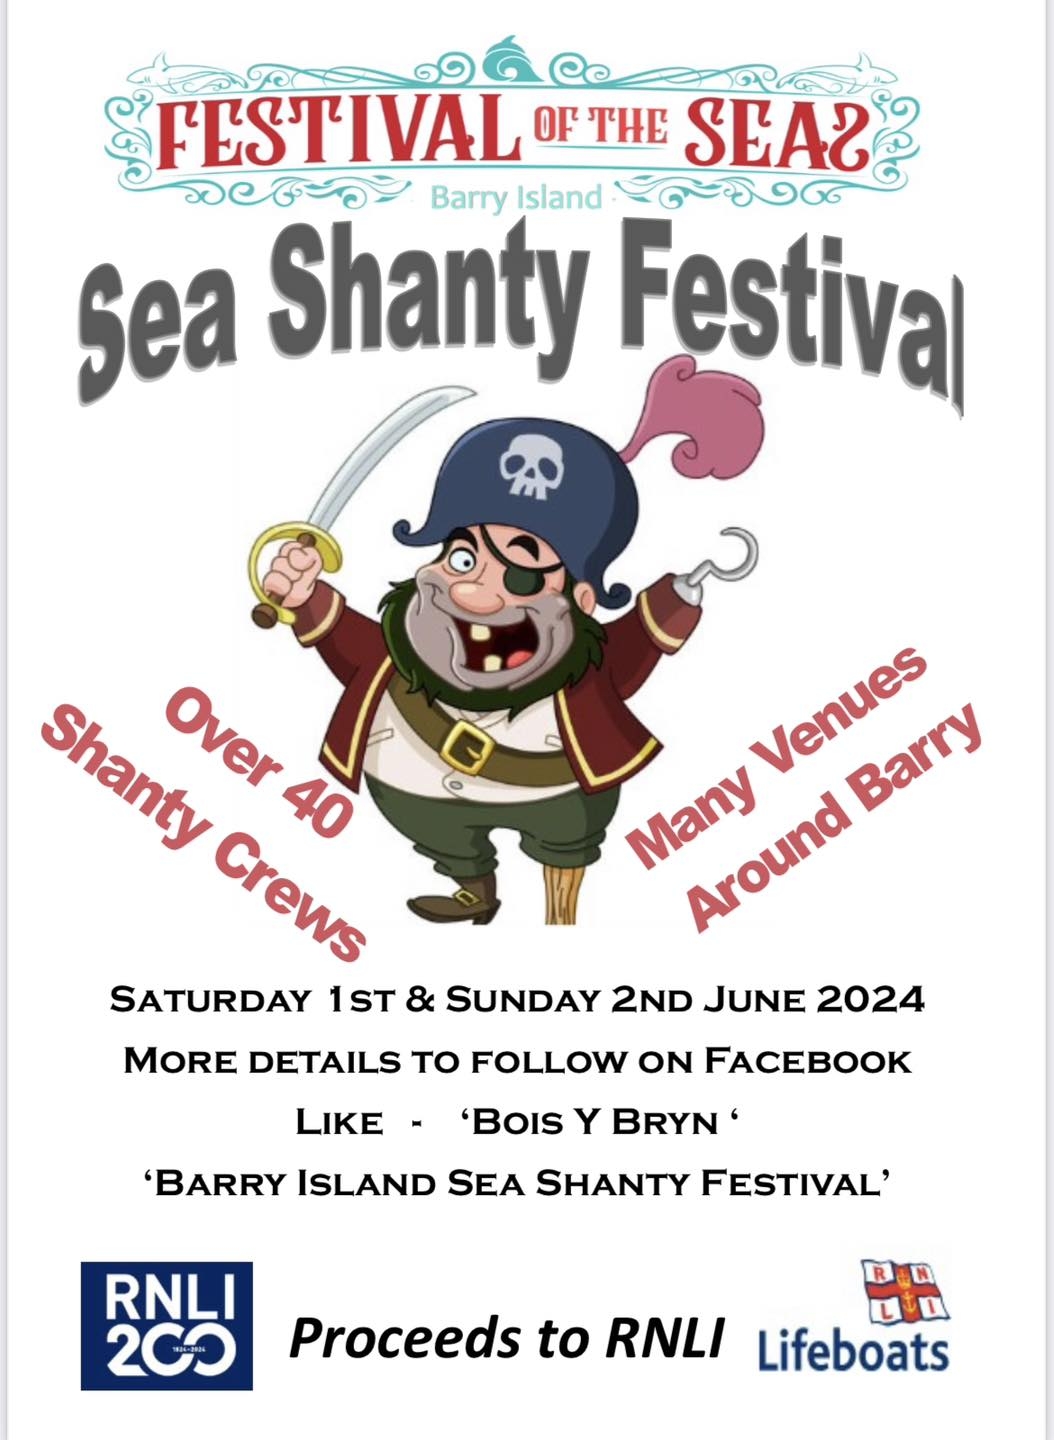 Festival of the Seas - Barry Island Sea Shanty Festival - Barry, UK